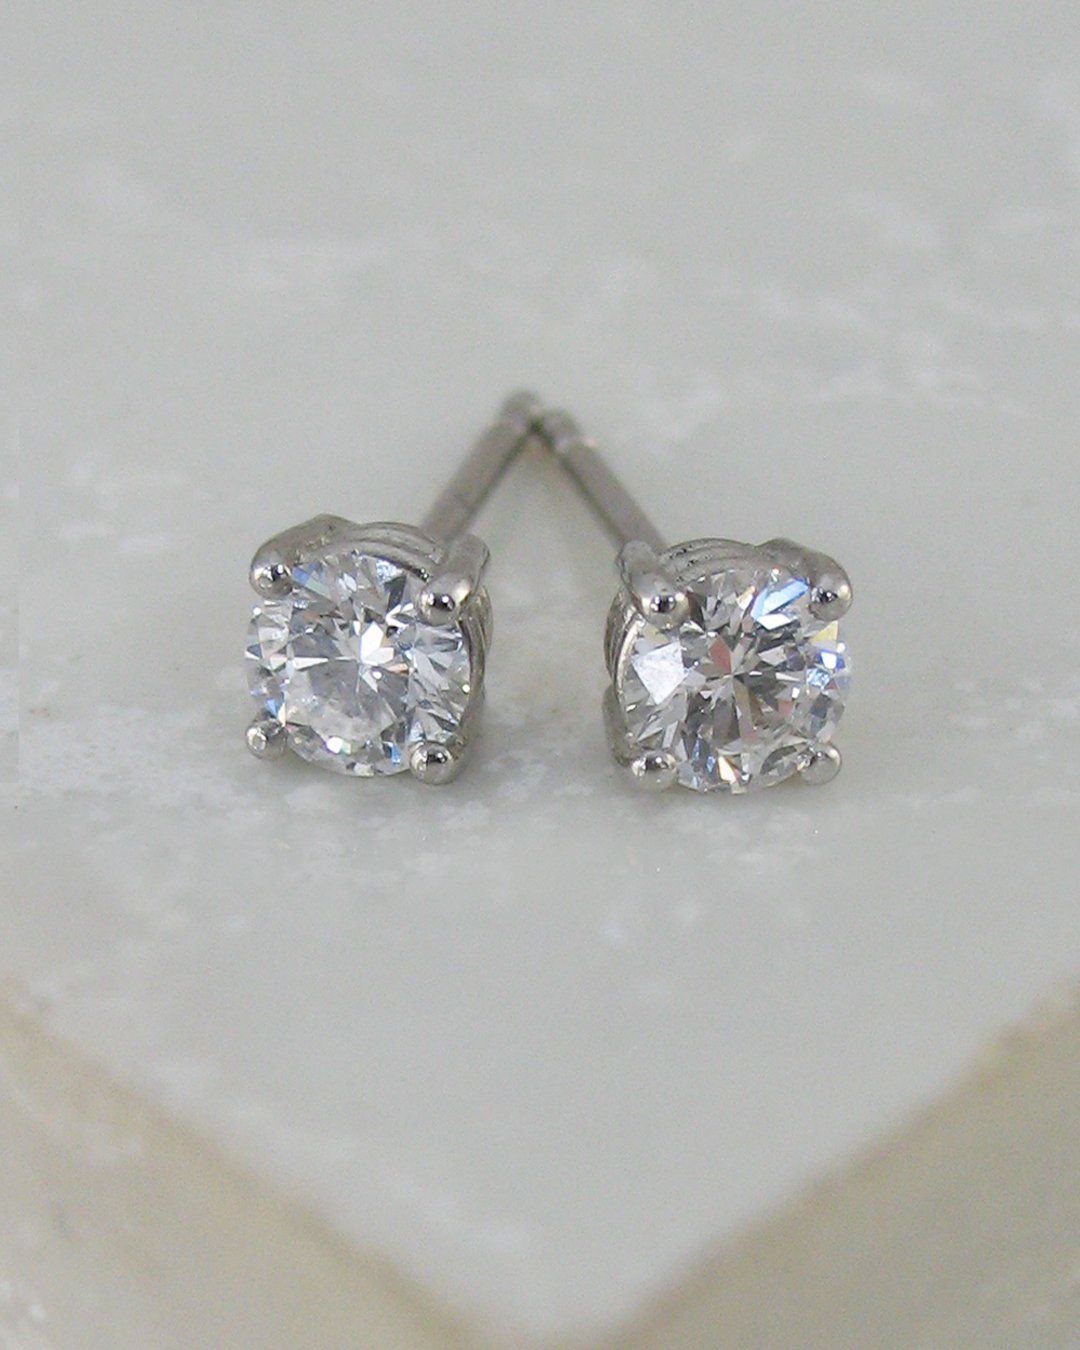 A pair of bespoke round diamond stud earrings